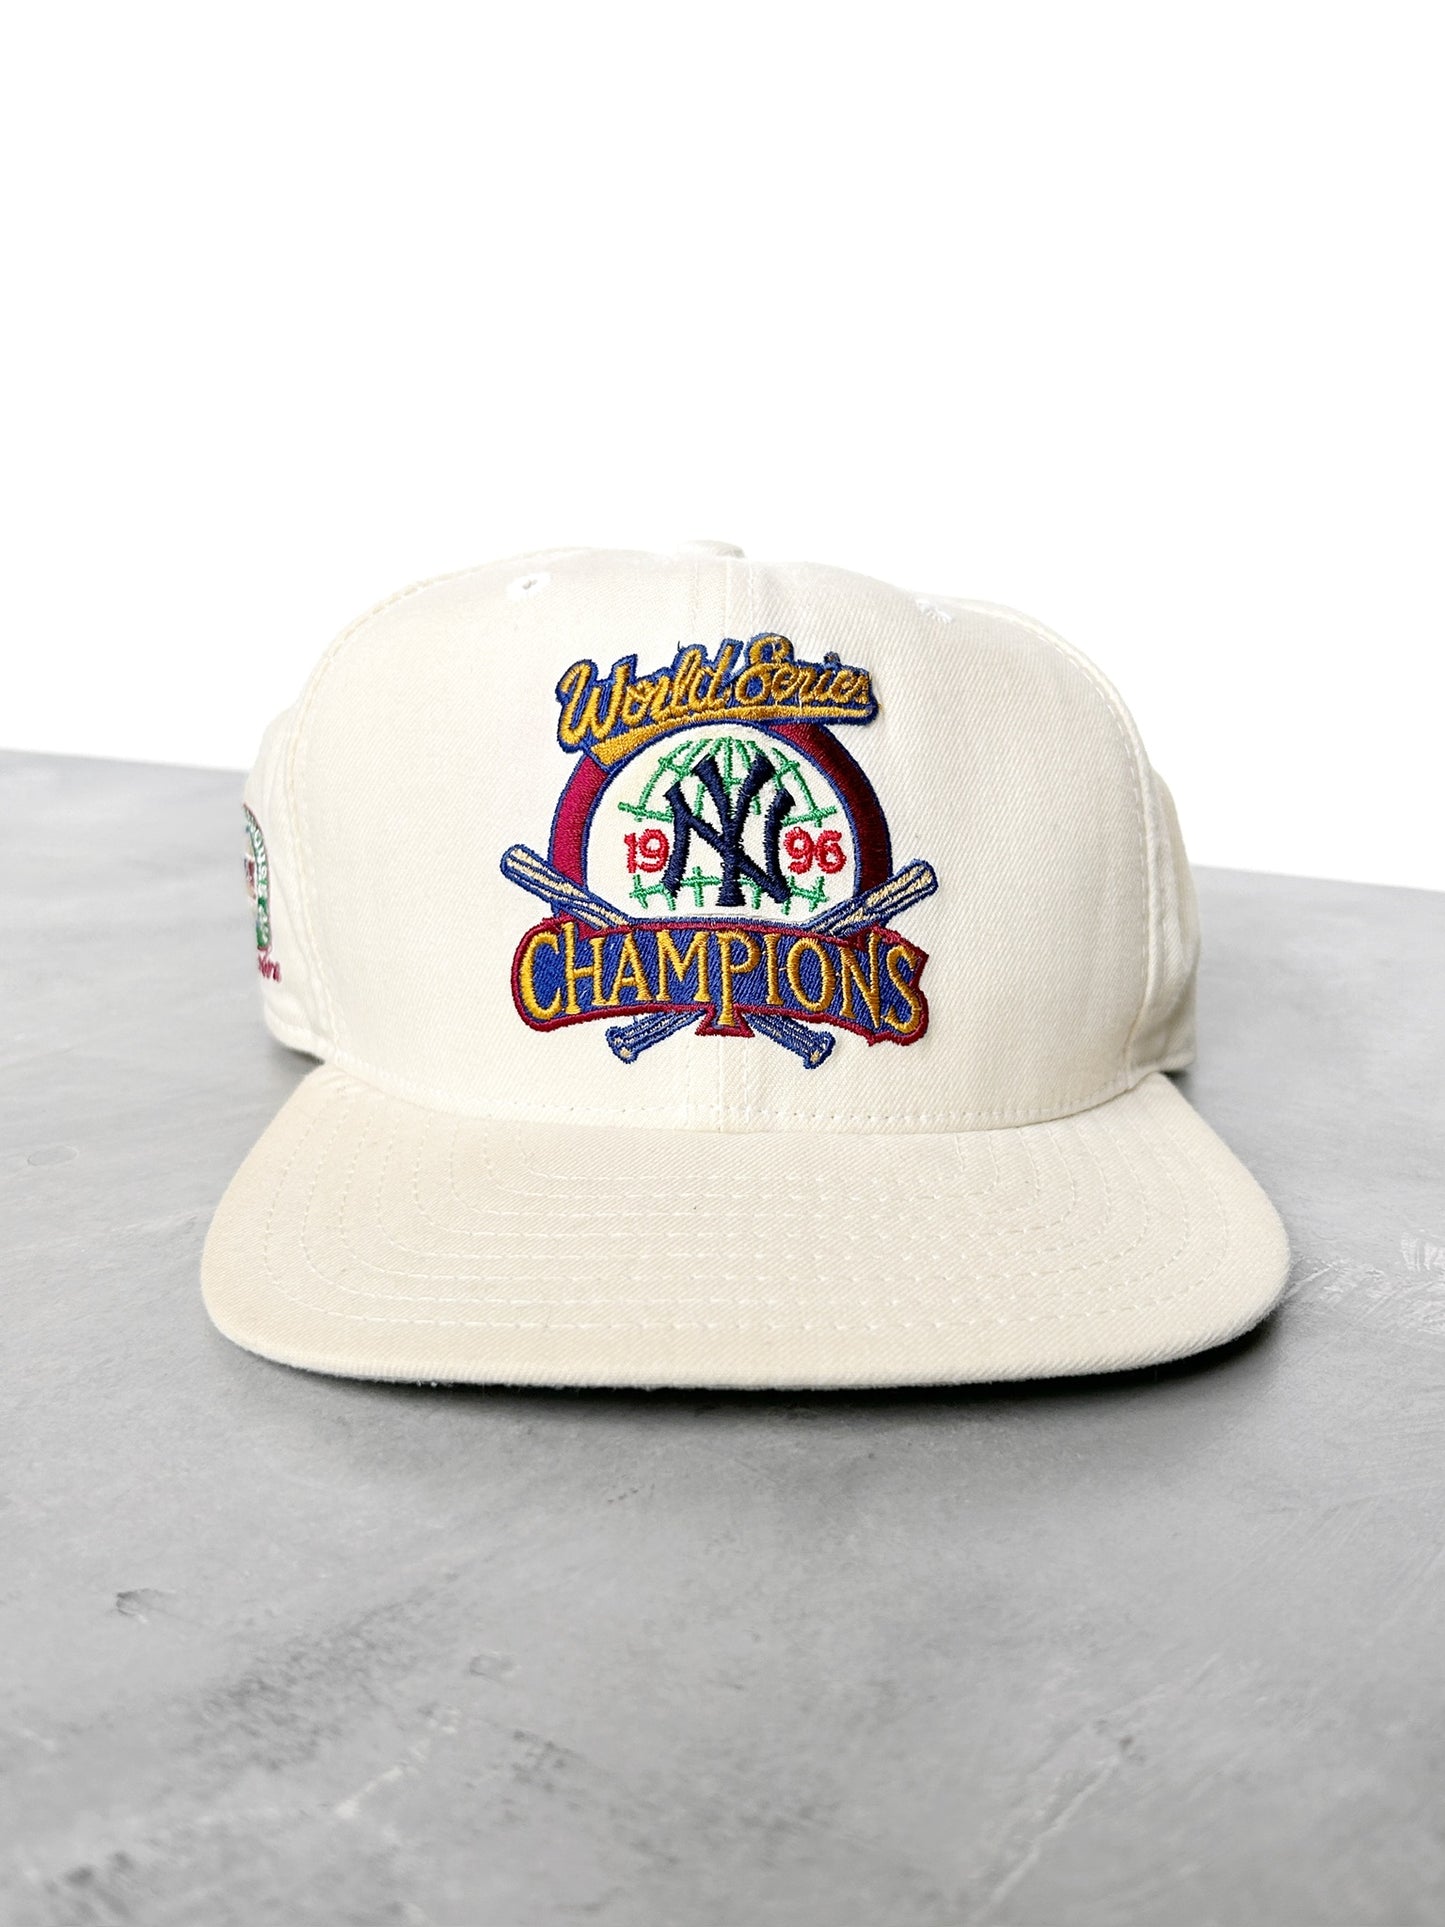 New York Yankees World Series Hat '96